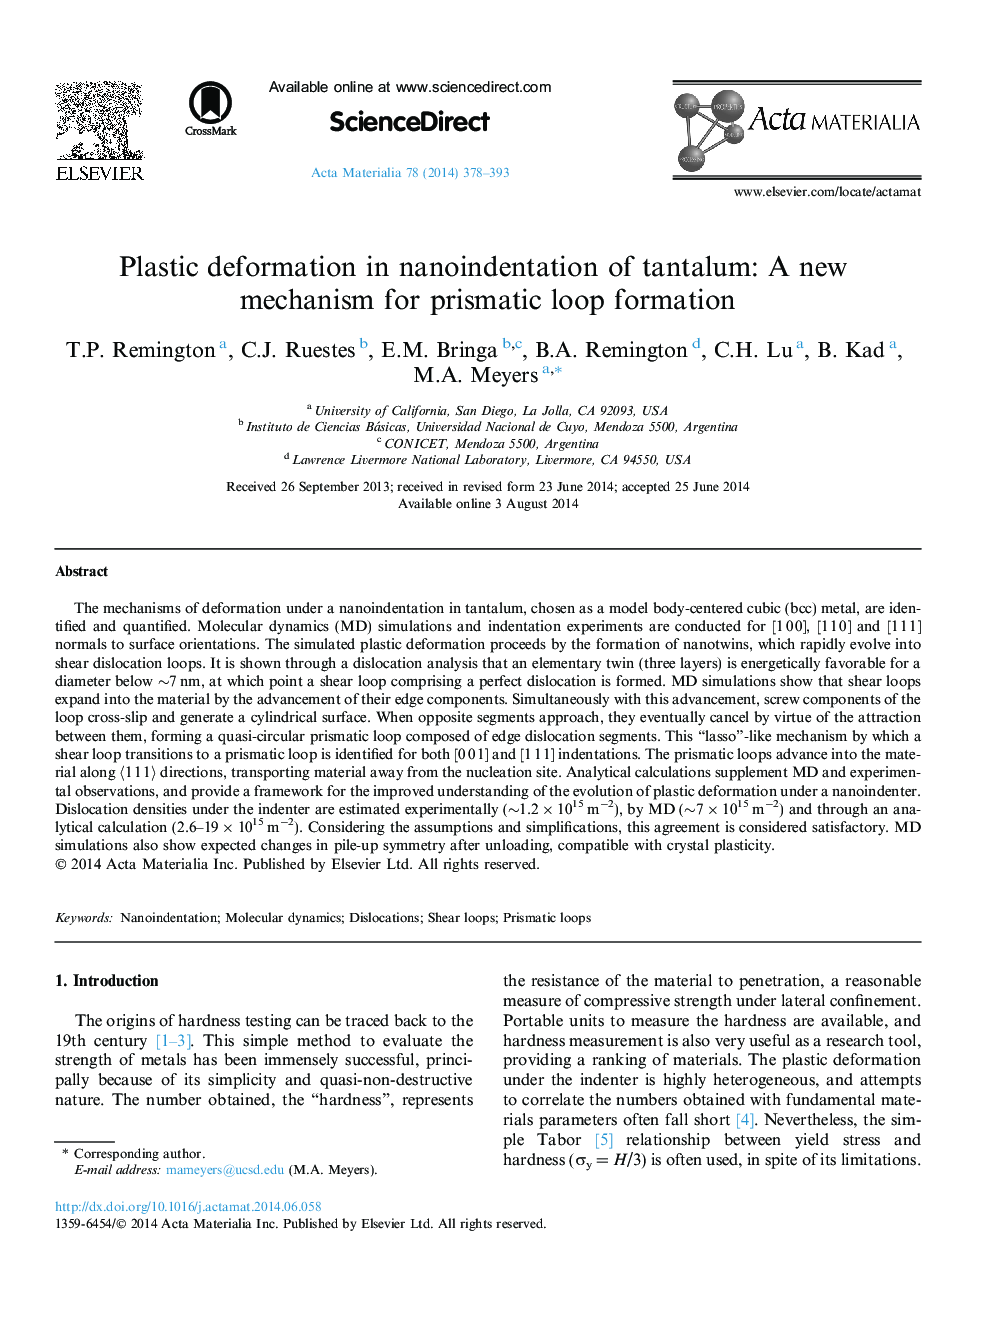 Plastic deformation in nanoindentation of tantalum: A new mechanism for prismatic loop formation